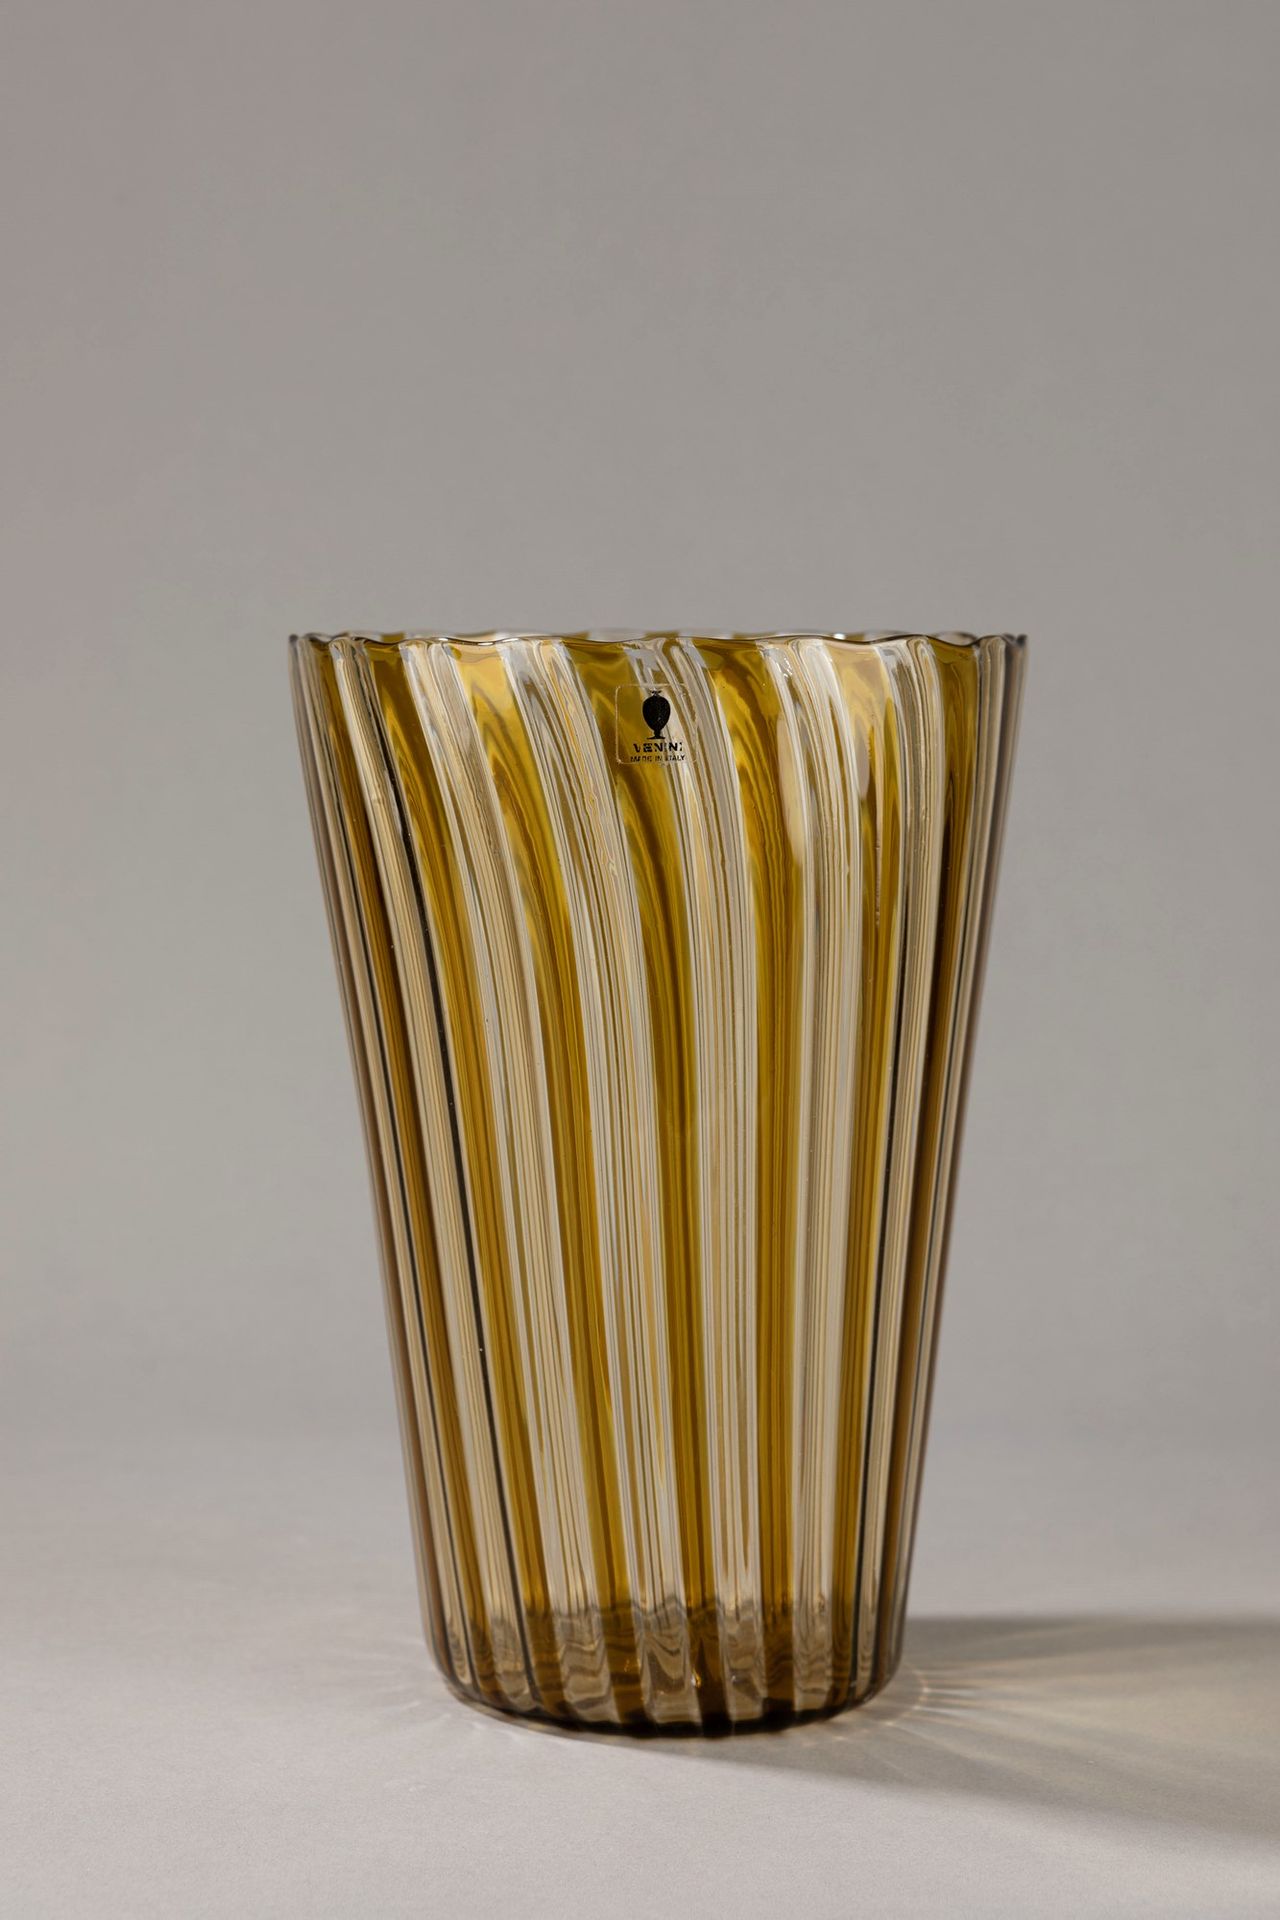 GIO PONTI 花瓶

h 22 x dim 16 cm
吹制芦苇玻璃。

原始标签。

雕刻的标志 "Venini Italia 80"。